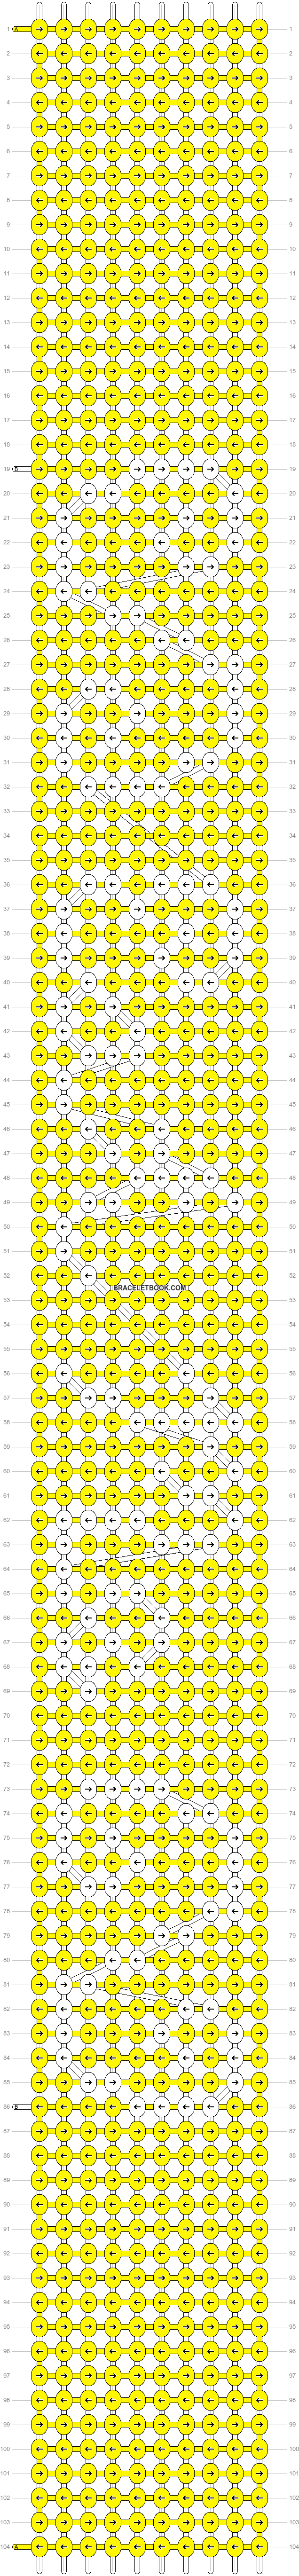 Alpha pattern #1505 variation #158024 pattern